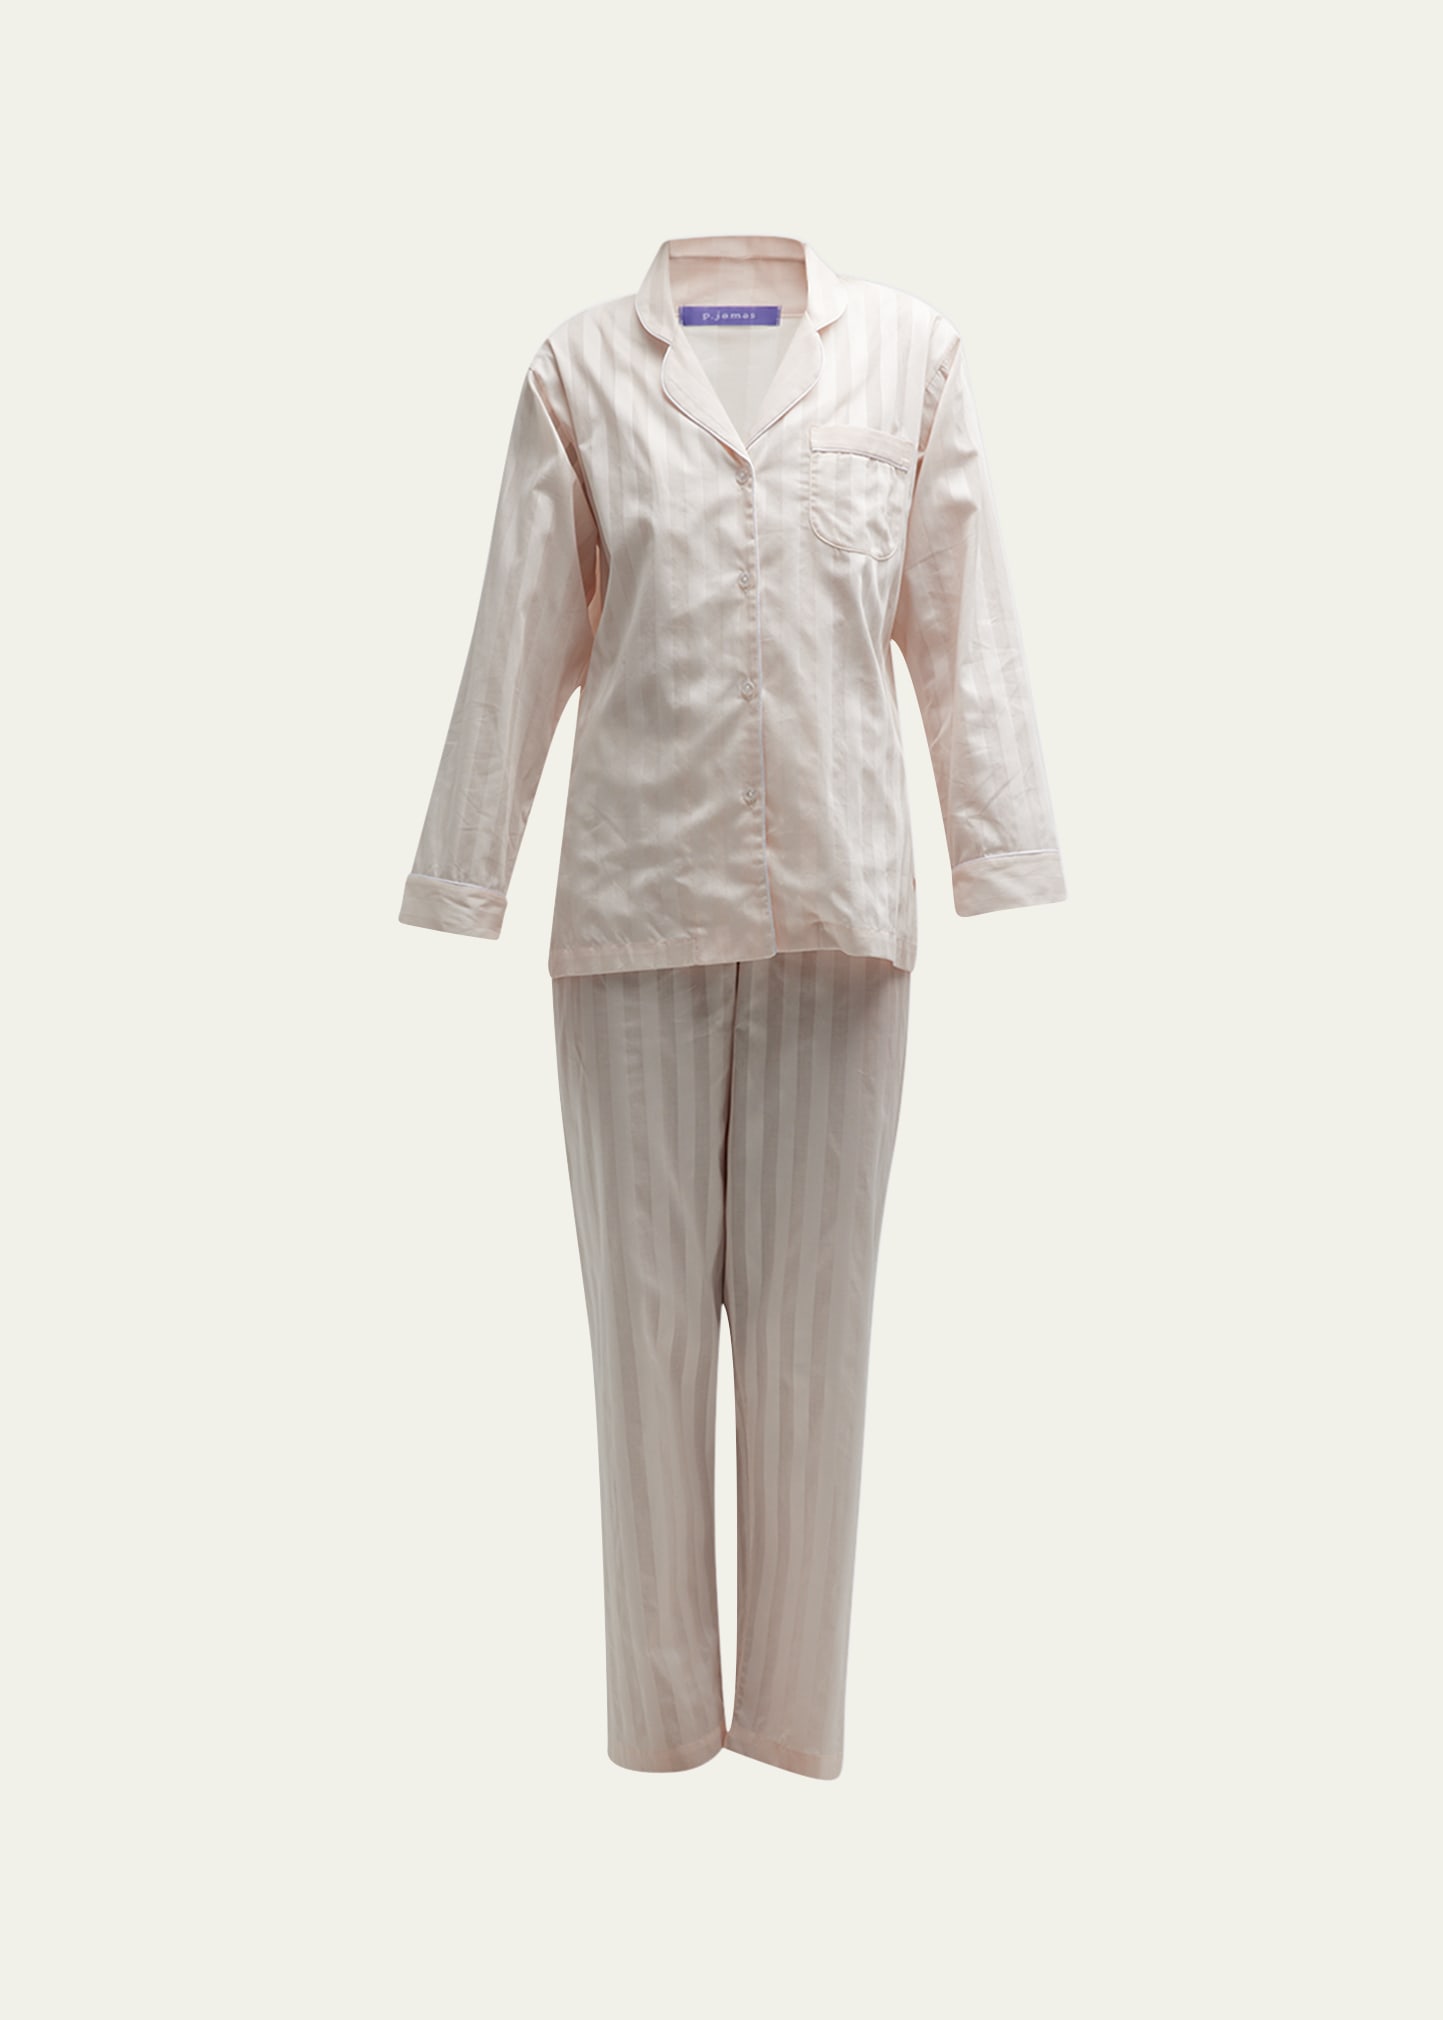 Tina Shadow-Stripe Long-Sleeve Long Pajama Set